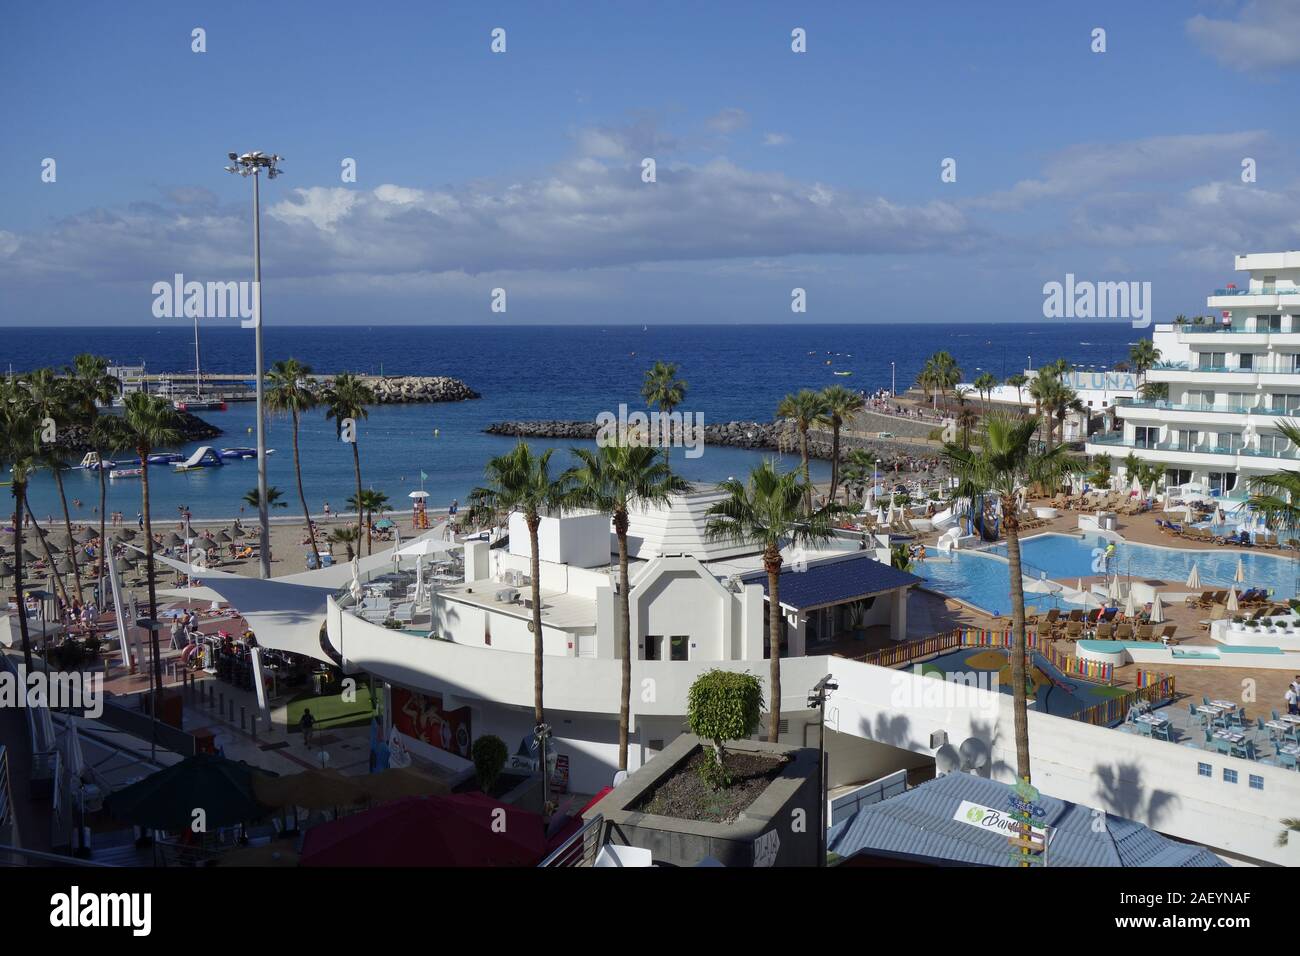 Tenerife, canary island, a spanish island, spain,off the coast of north west africa. Stock Photo